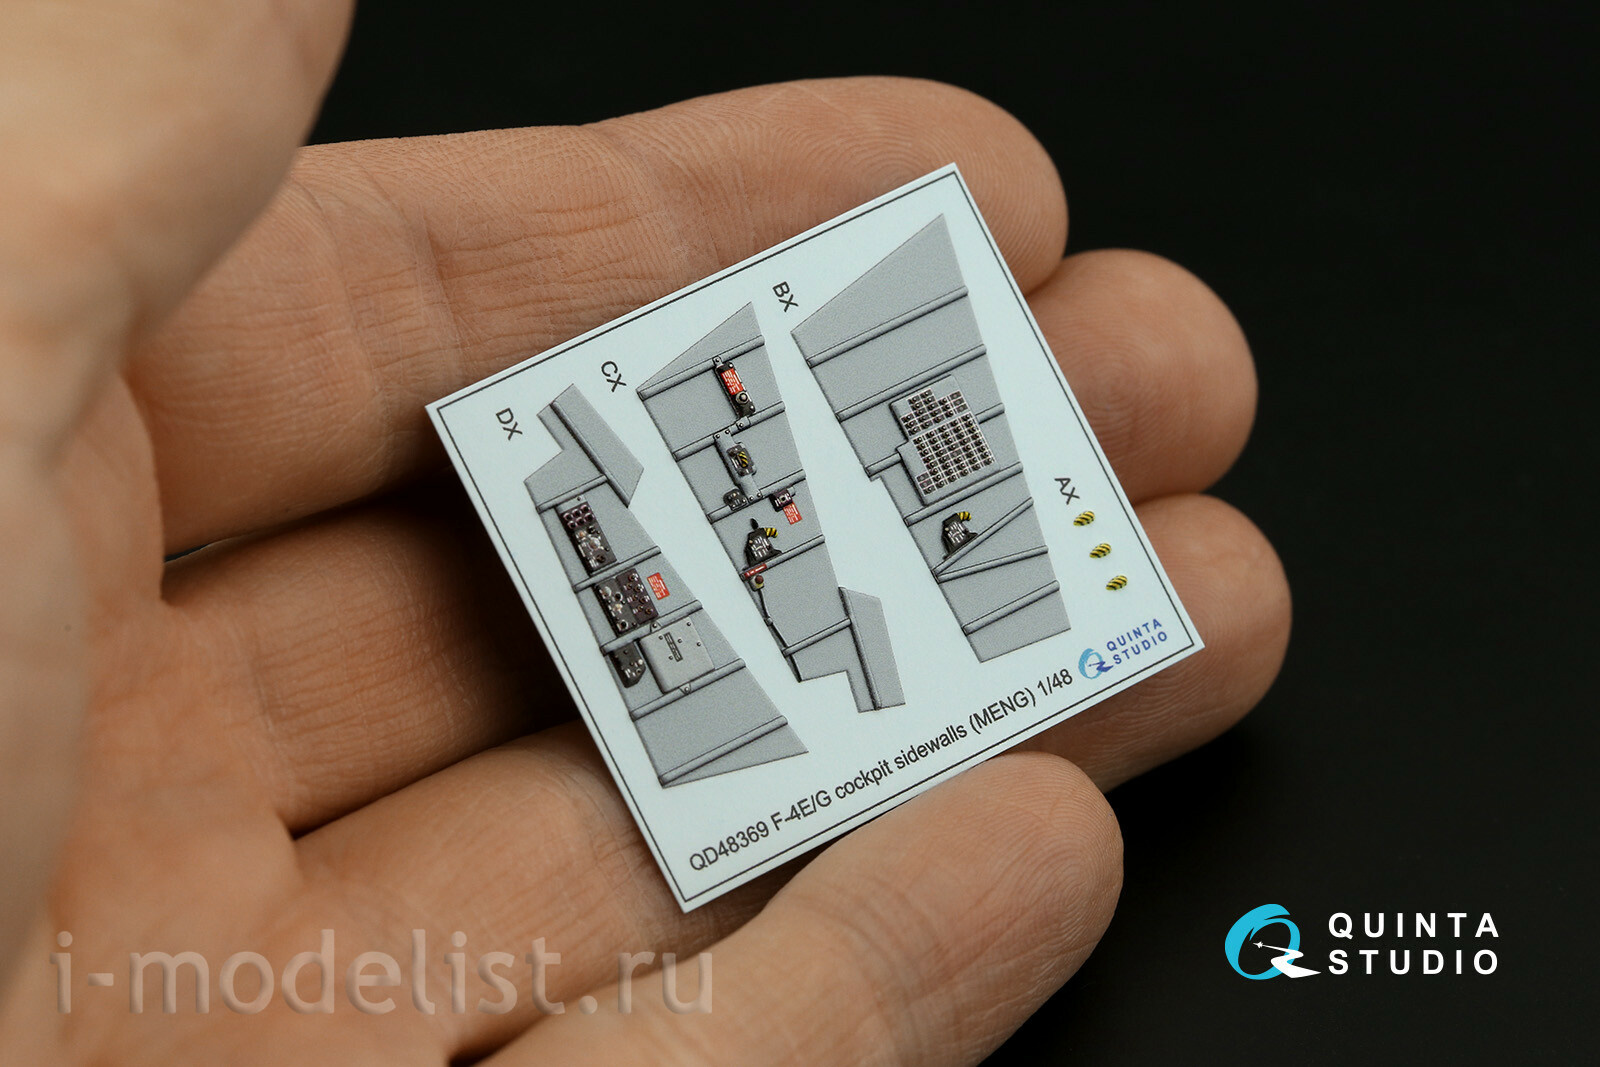 QD+48342 Quinta Studio 1/48 3D Cabin Interior Decal F-4G late (Meng) (with 3D printed parts)